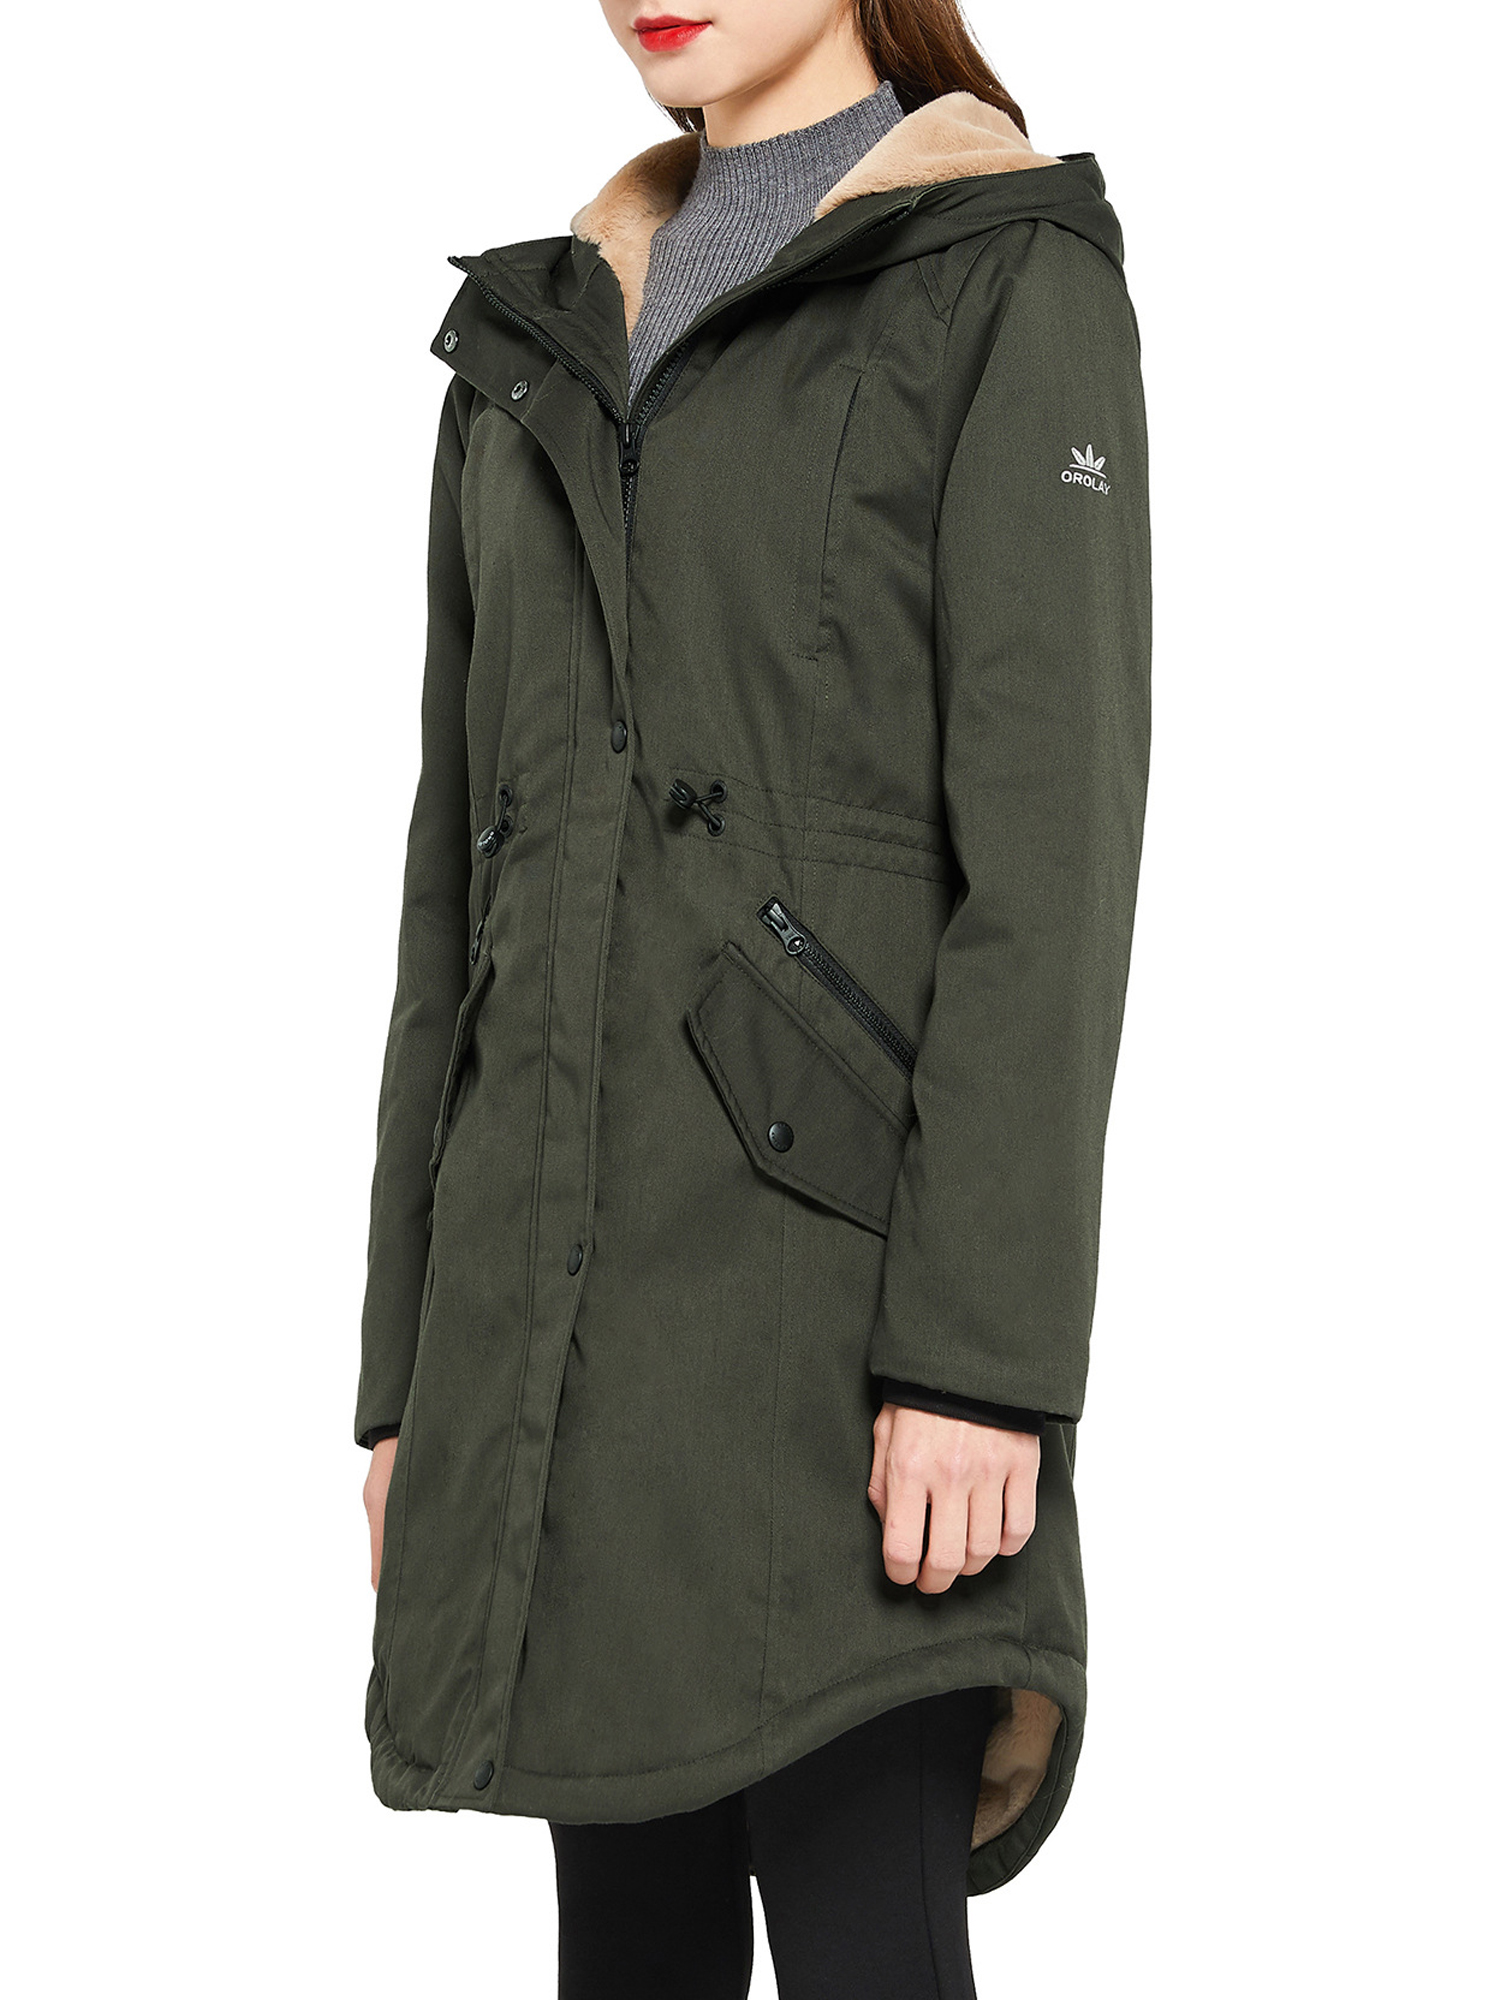 Orolay Women's Winter Parka Fleece Parka Warm Winter Coat Hoodie Jacket Mid length Winter Jacket Green XL - image 3 of 5